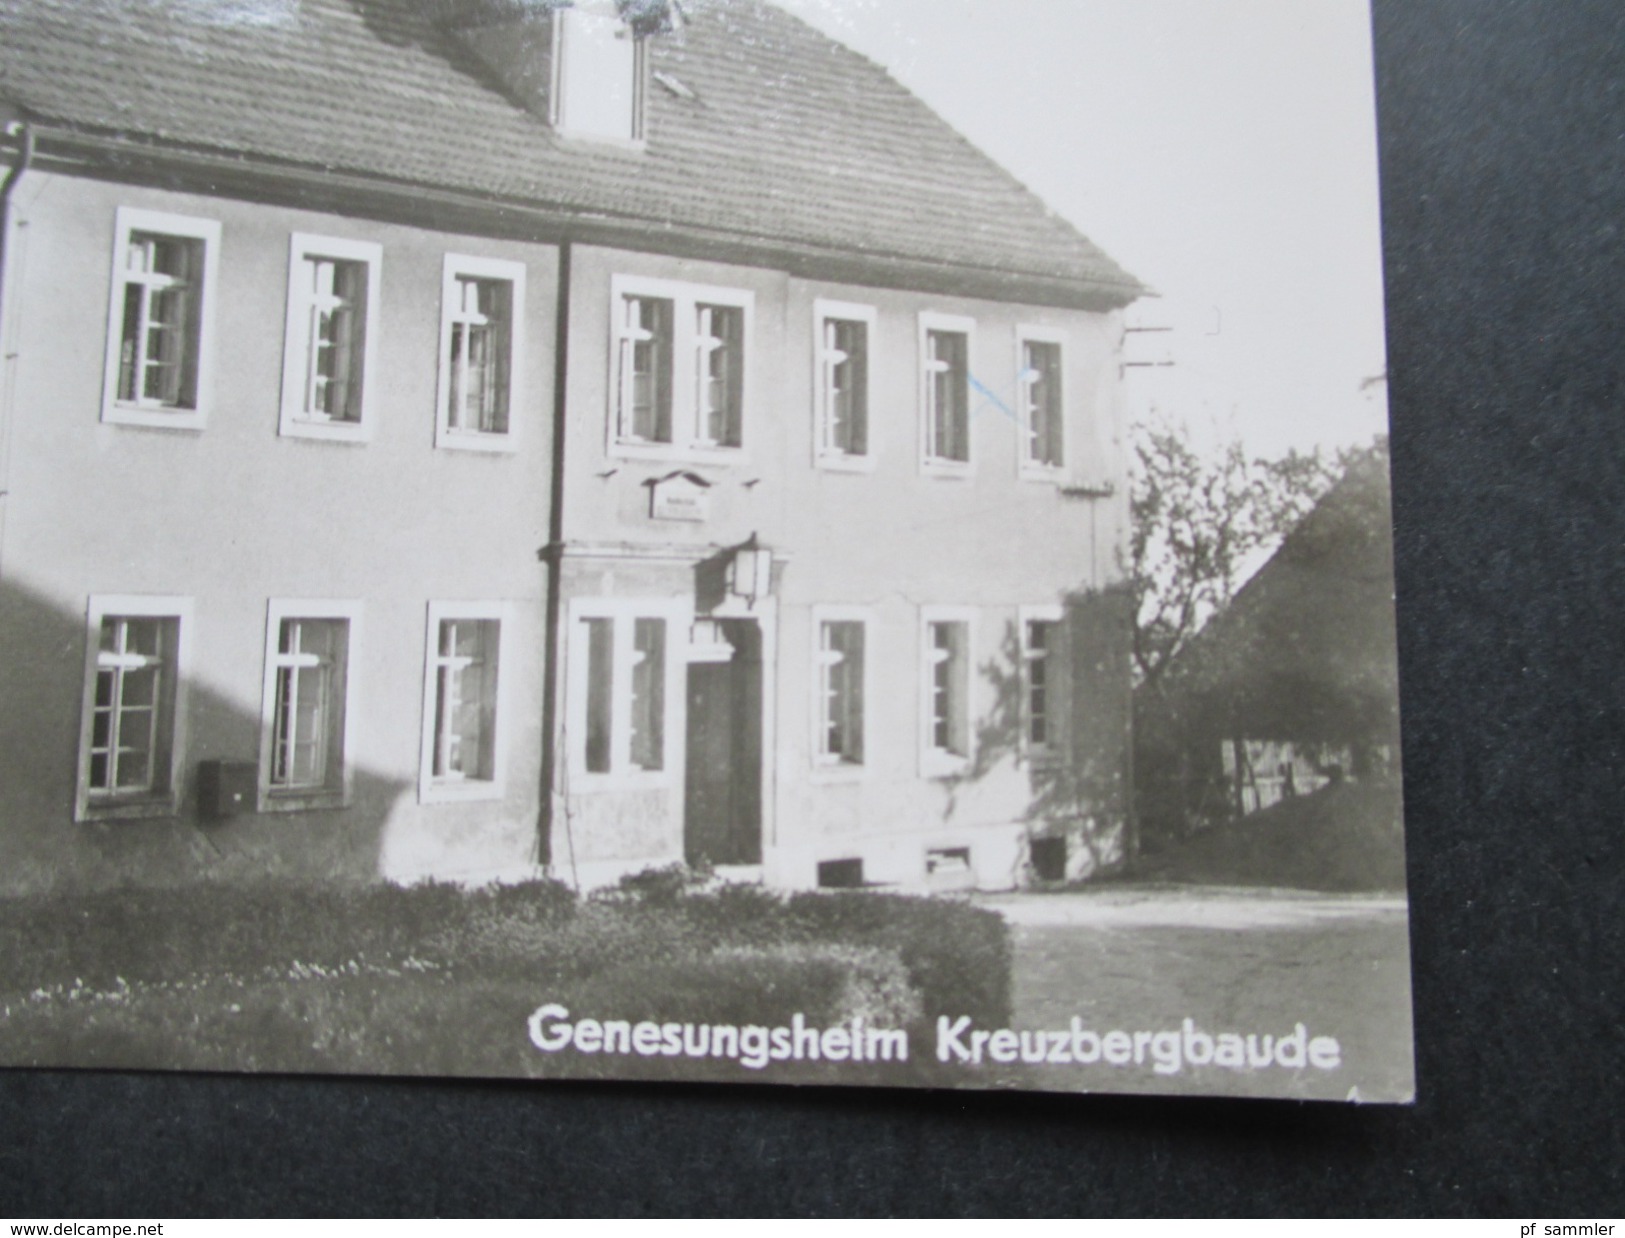 AK 1974 Echtfoto DDR Genesungsheim Kreuzbergbaude. 8901 Jauernick - Buschbach. Kreis Görlitz. - Goerlitz